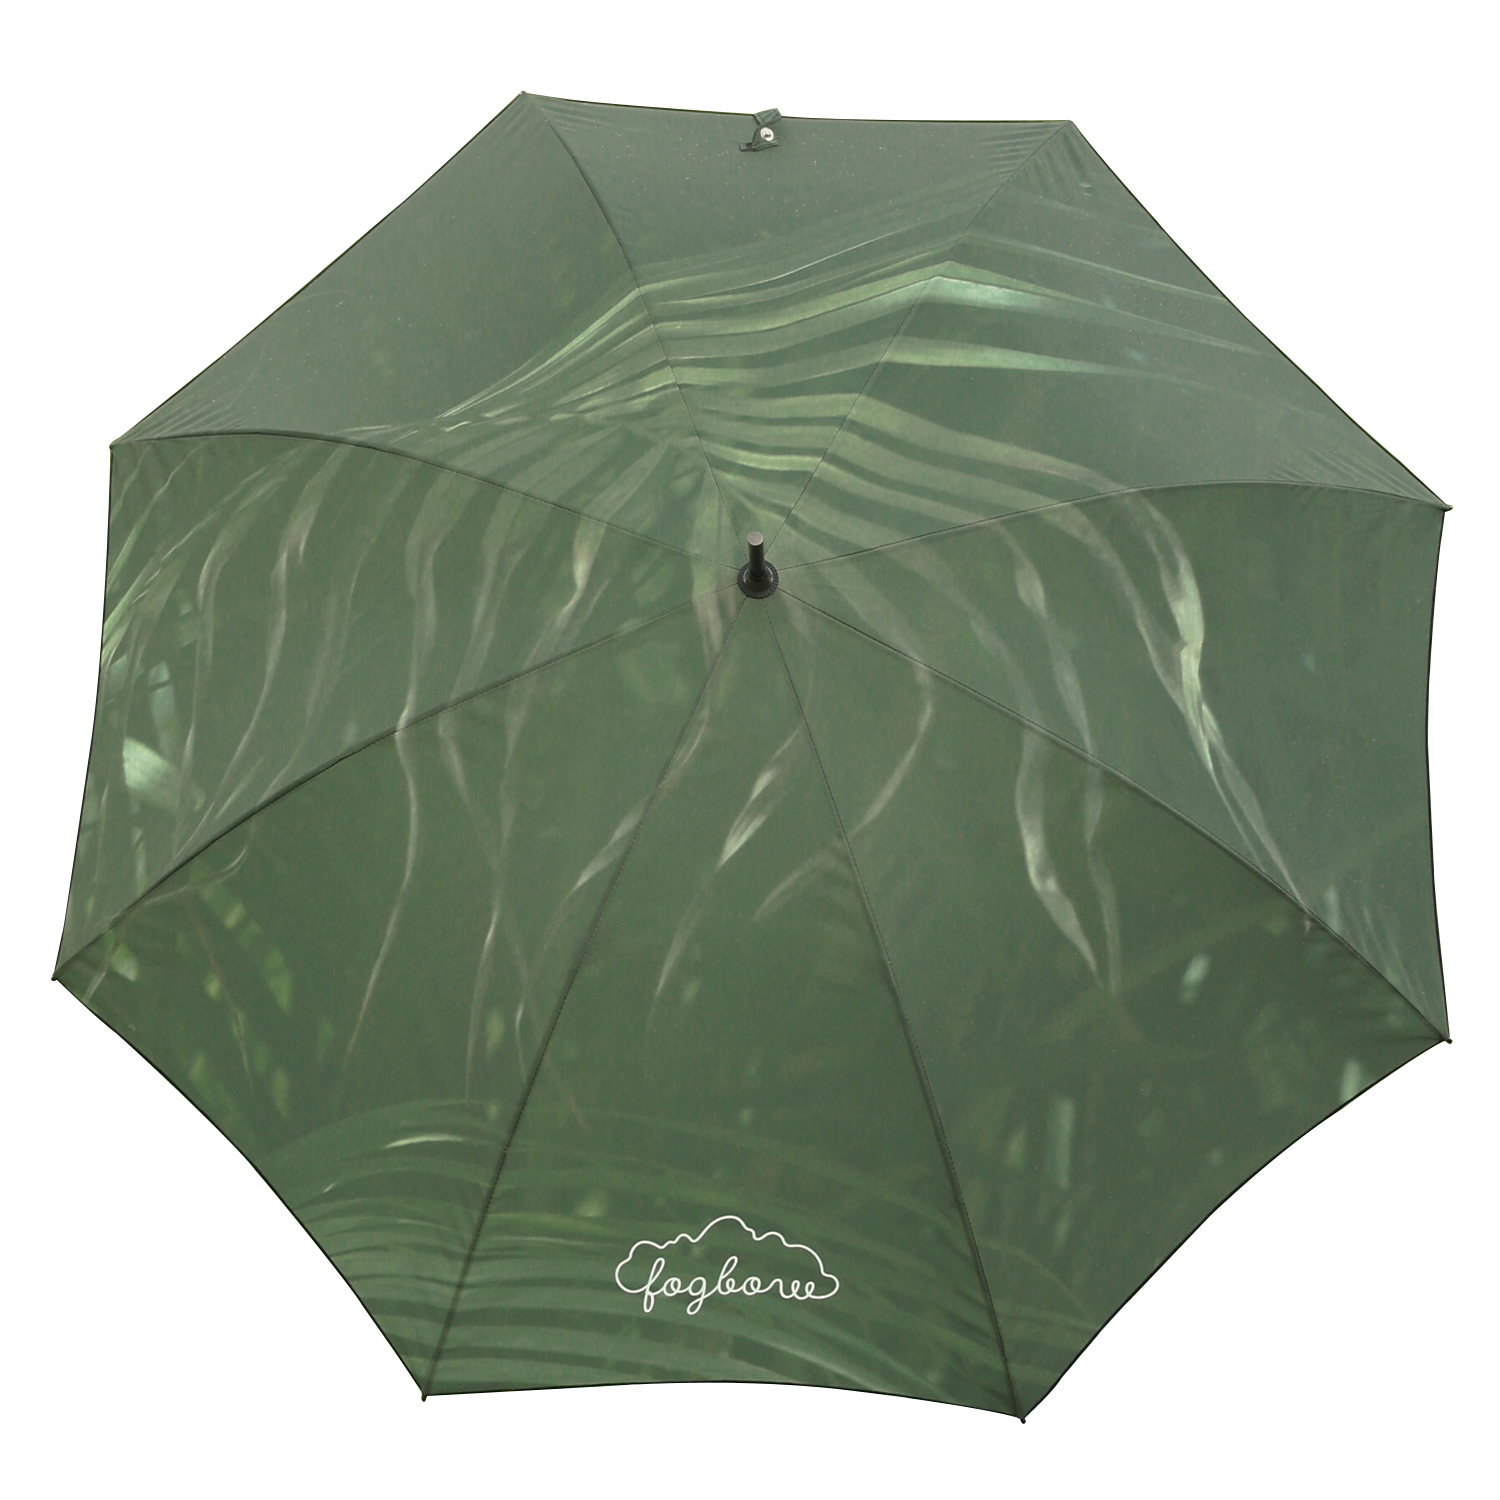 FOGBOWhumid umbrella